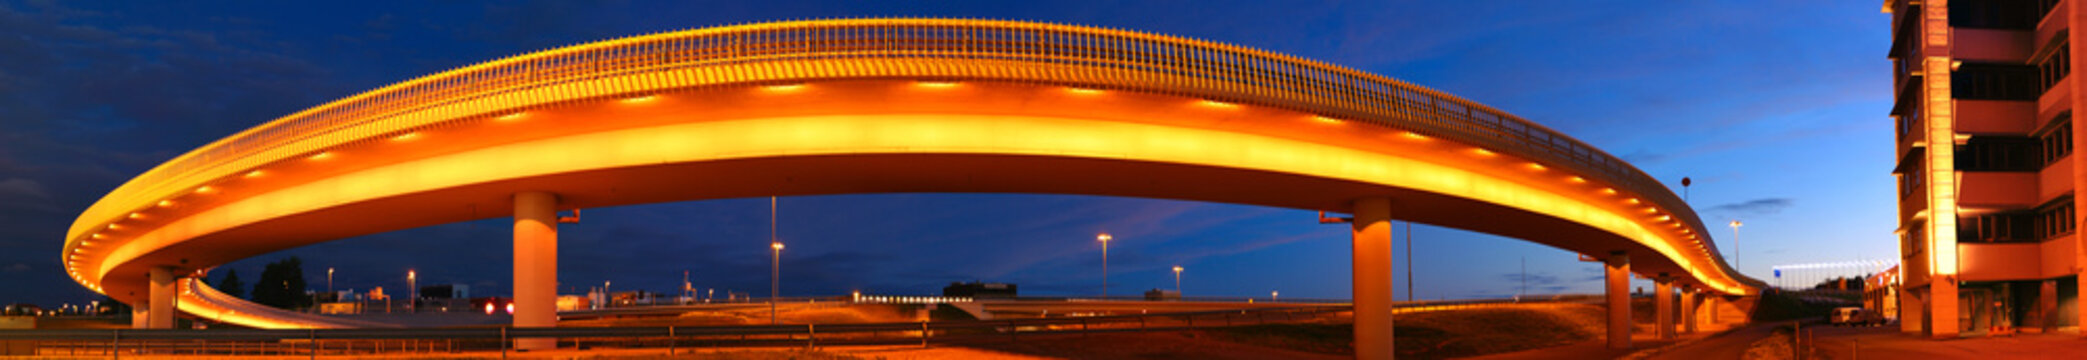 Lighted round bridge at night